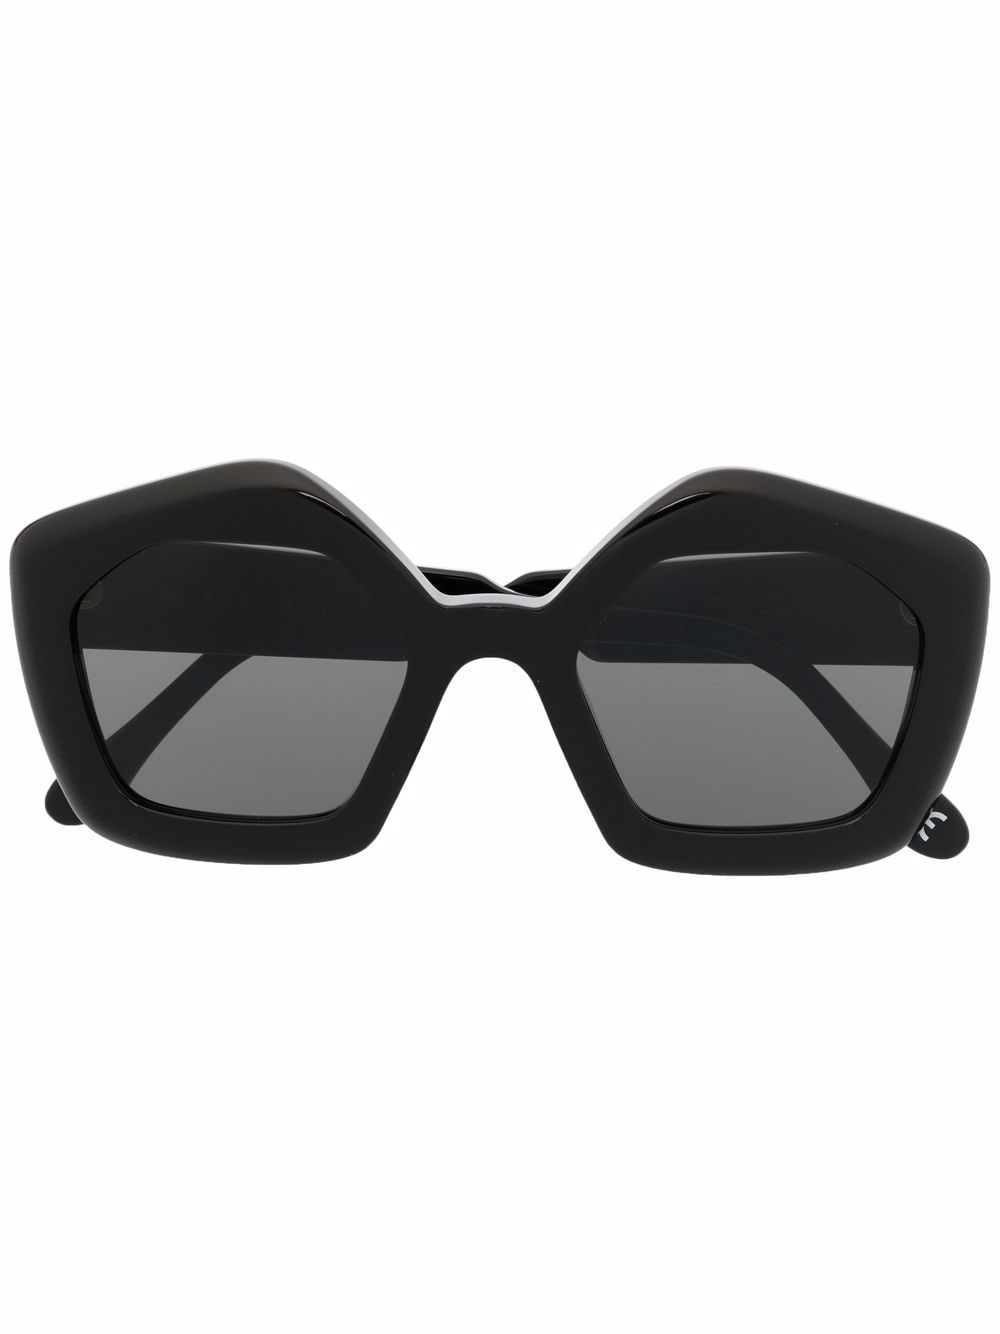 Marni Eyewear logo geometric sunglasses - Black von Marni Eyewear